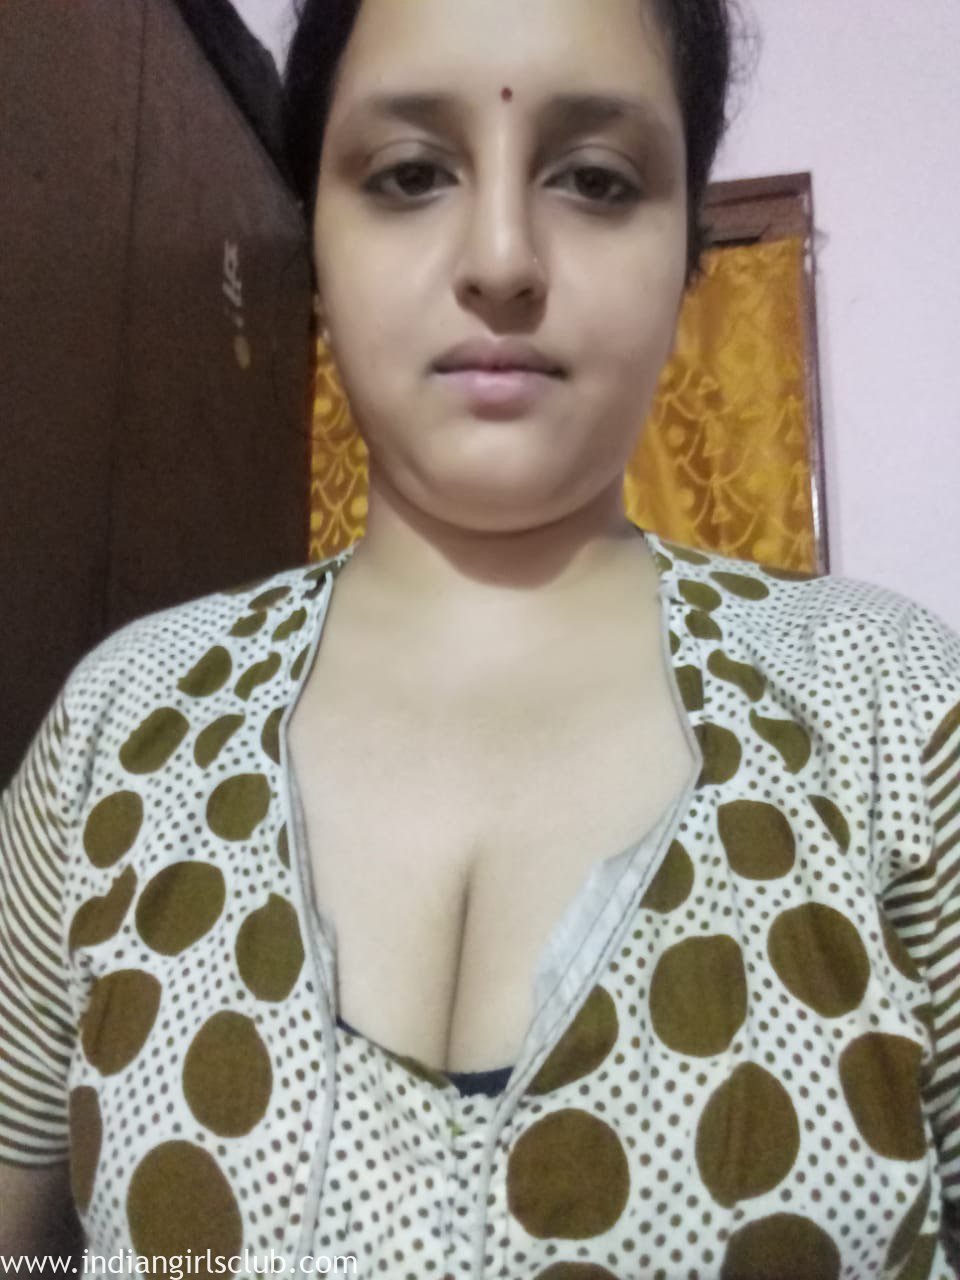 Indian House Wife Sex Boobs - big-tits-bengali-indian-housewife-ready-for-hot-sex-6 - Indian Girls Club - Nude  Indian Girls & Hot Sexy Indian Babes